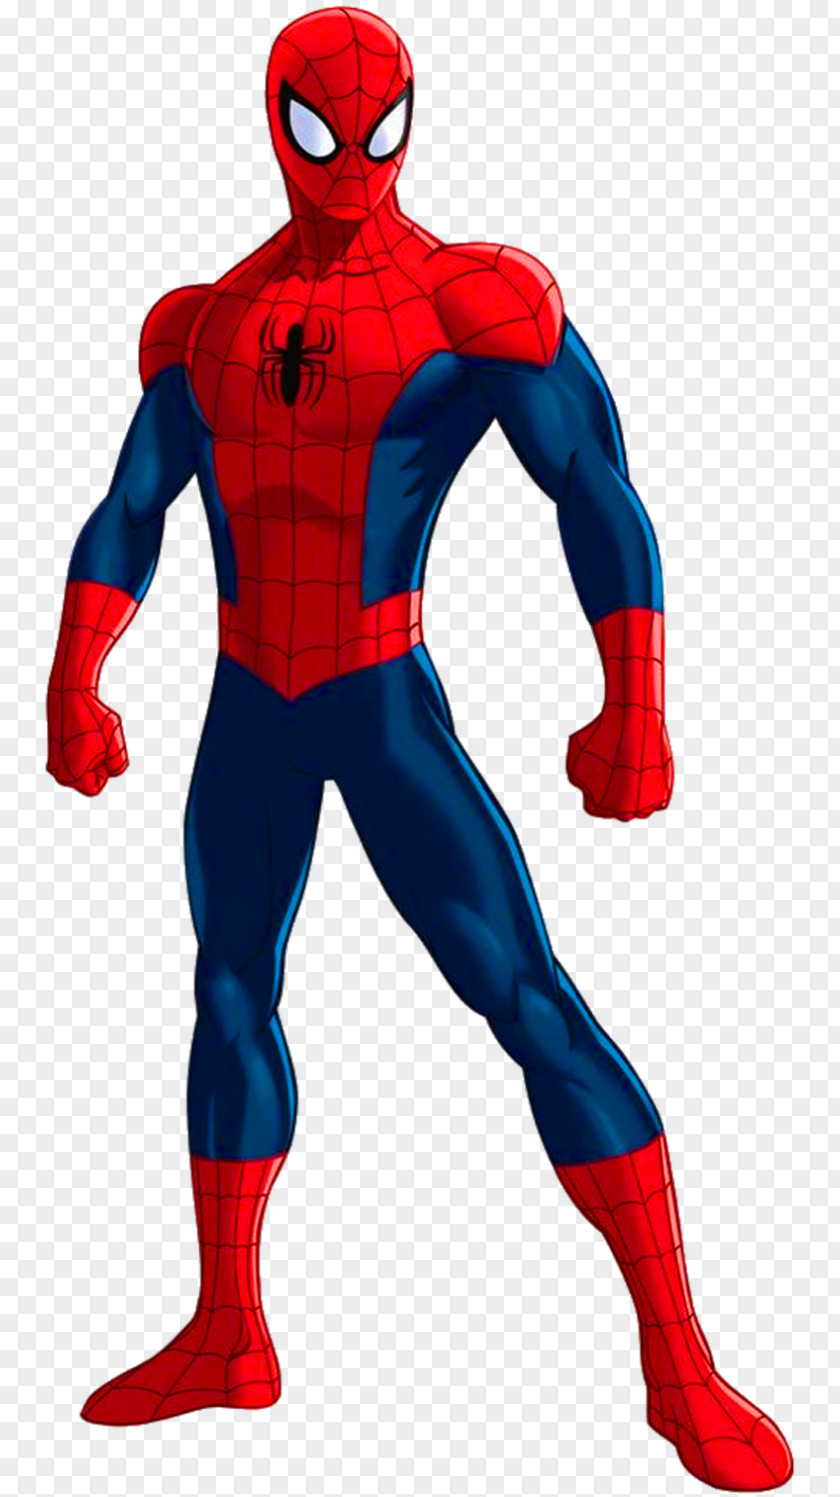 Spider Ultimate Spider-Man Hulk Standee Poster PNG